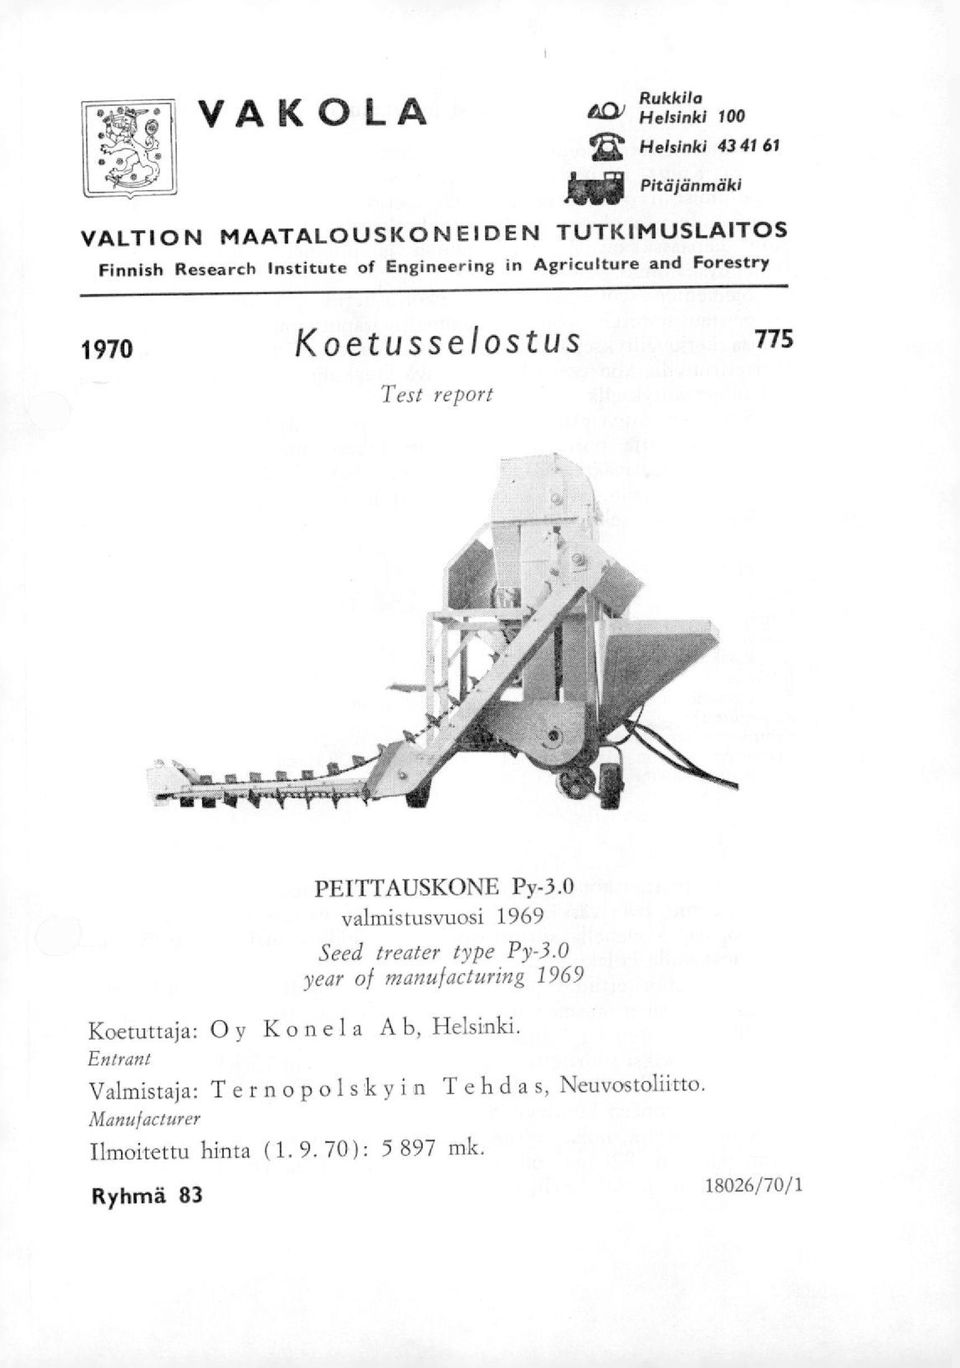 0 vahnistusvuosi 1969 Seed treater type Py-3.0 year of manufacturing 1969 Koetuttaja: 0 y Konela A b, Helsinki.